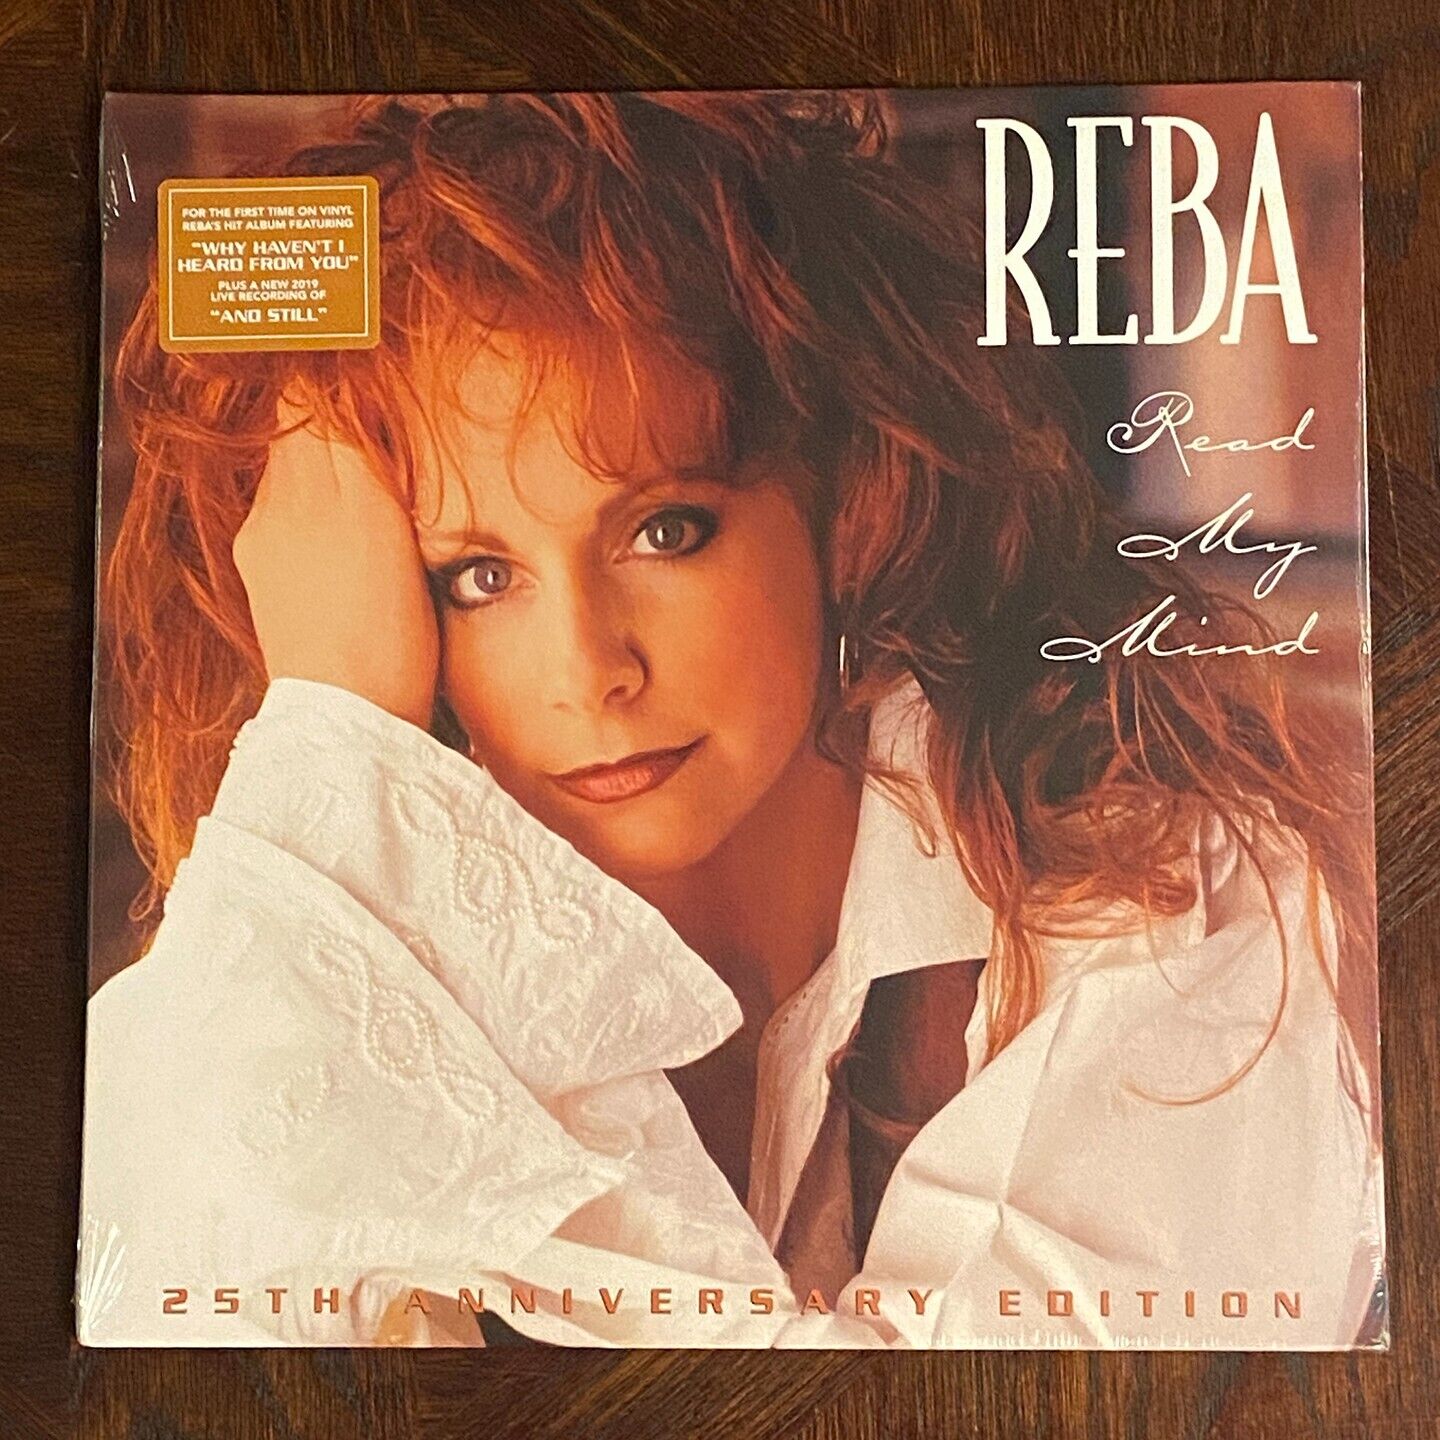 Reba McEntire - Read My Mind 25th Anniversary Edition Vinyl LP - NEW SEALED